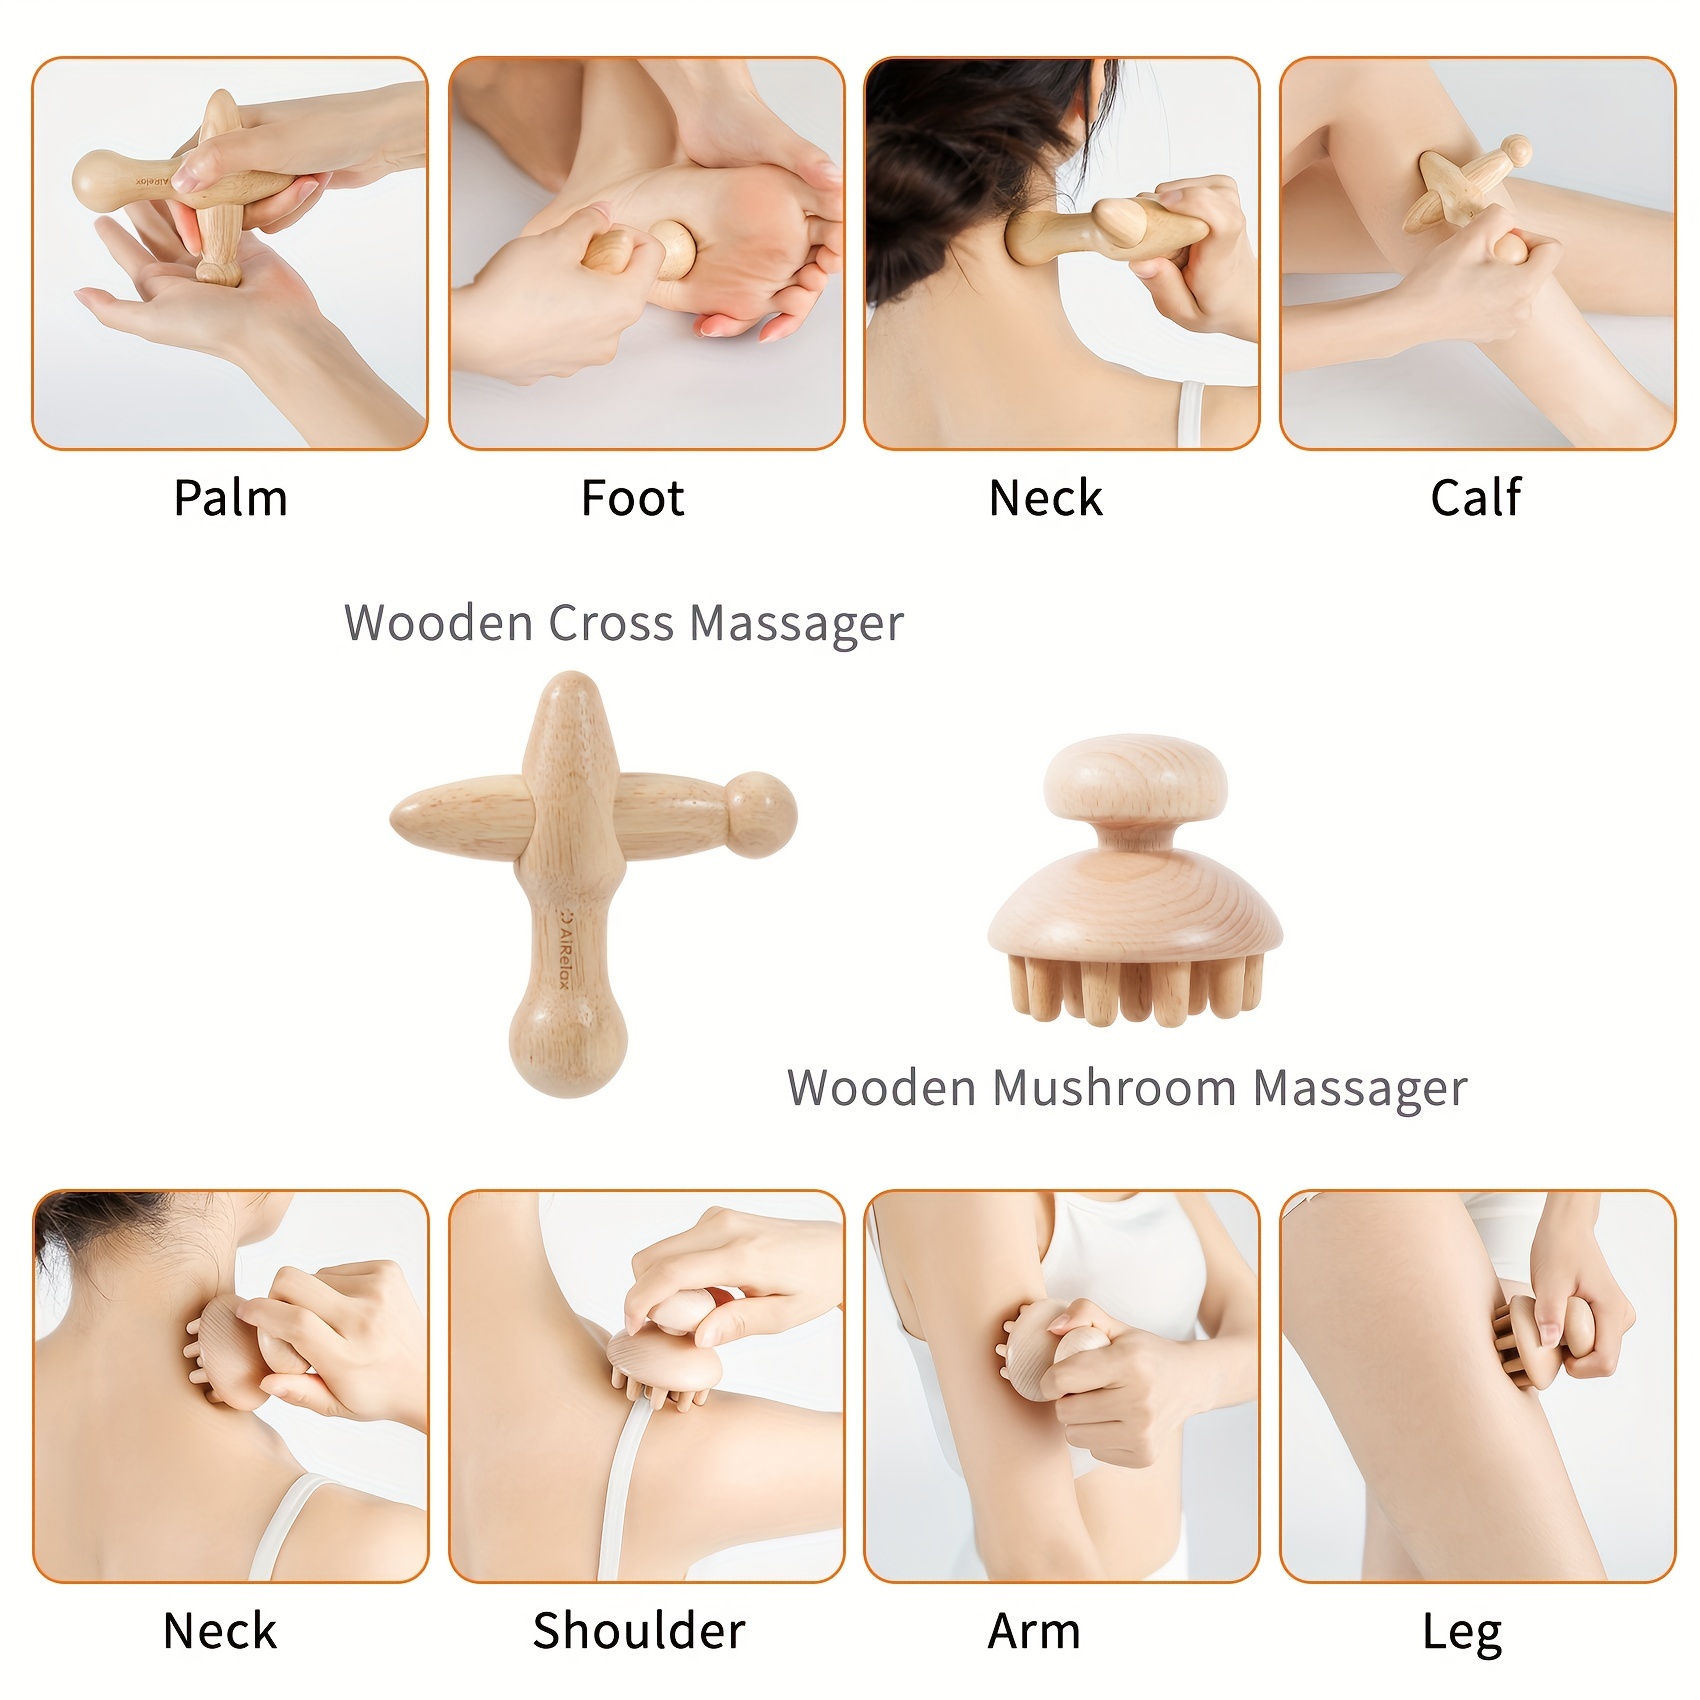 Wooden Massage Tools for Anti-Cellulite Treatment - PALO BONDI